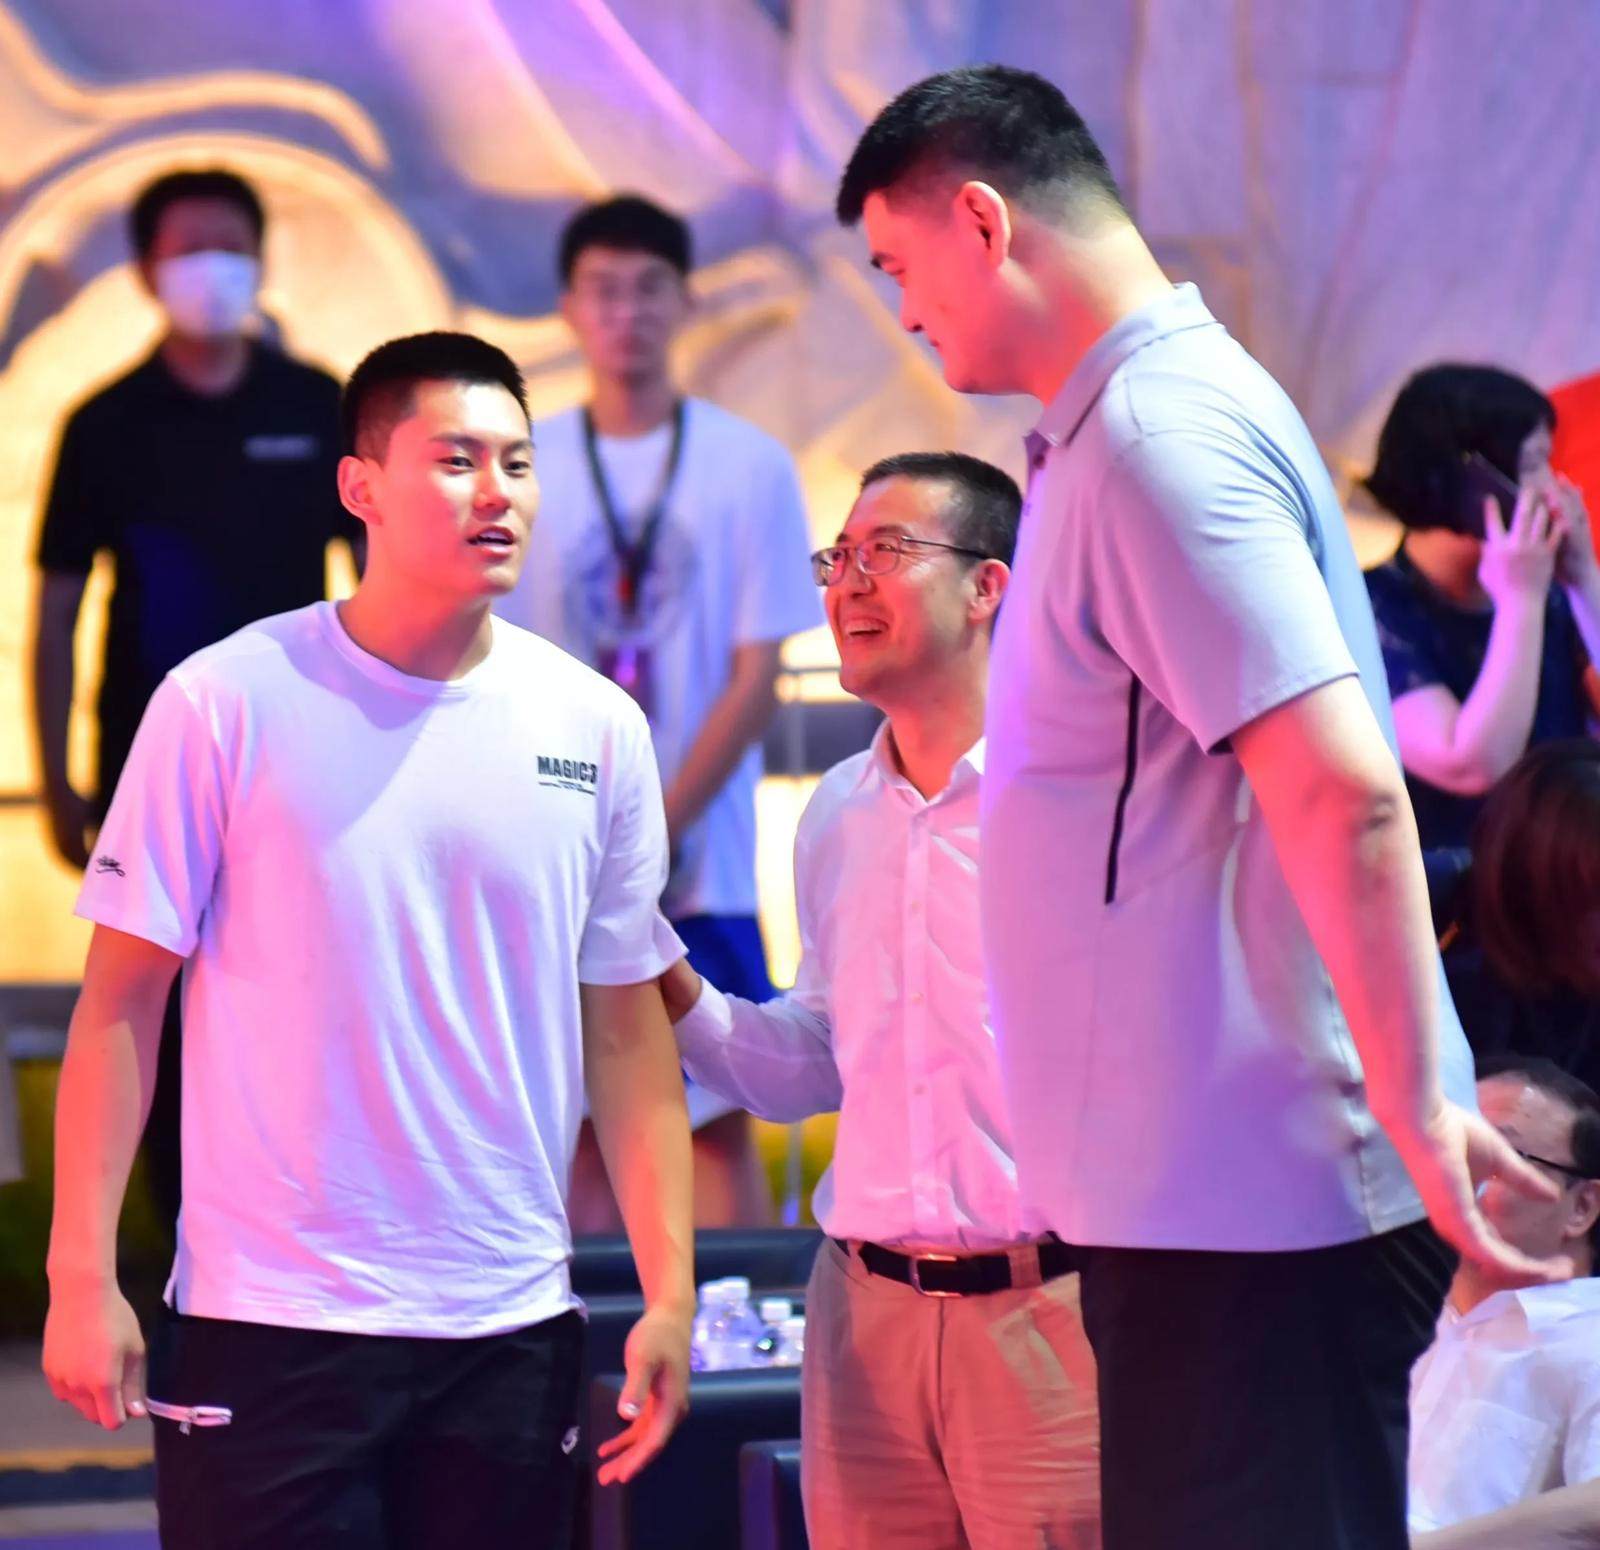 Jeremy Lin Scores 21 Points as Beijing Ducks Lose to Zhejiang